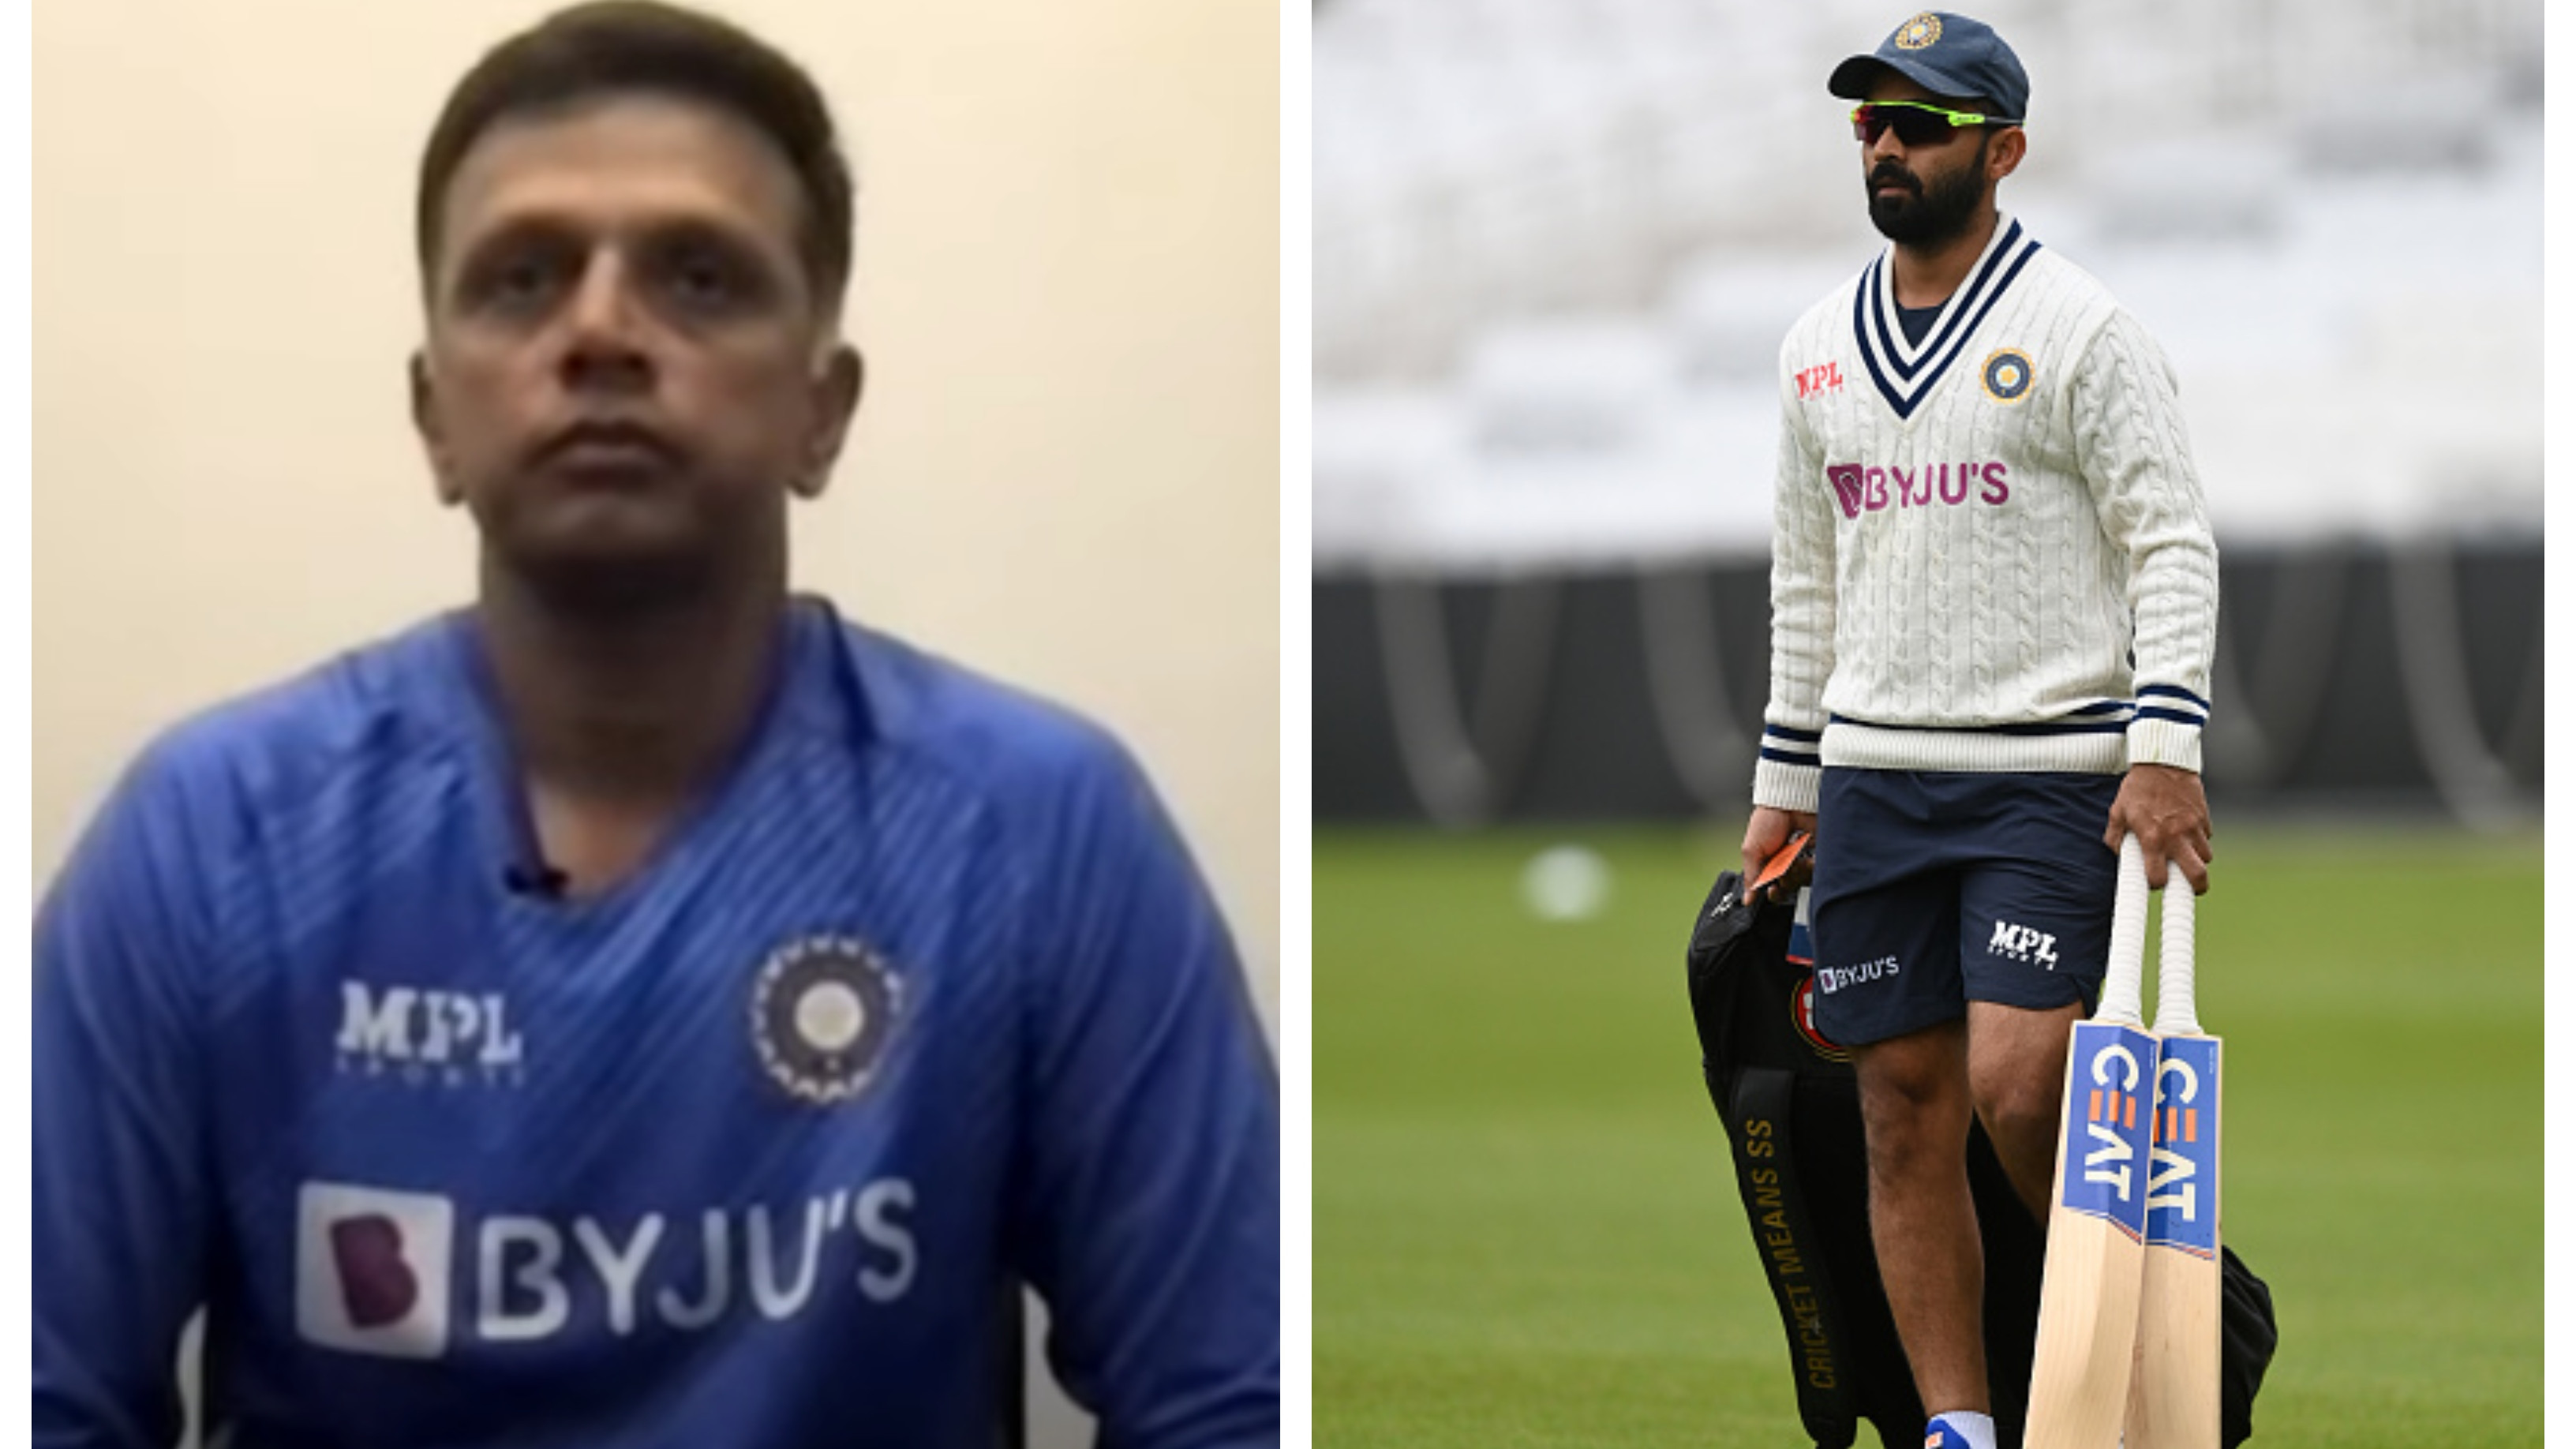 SA v IND 2021-22: “He seems to be in a really good space”, Rahul Dravid on Ajinkya Rahane ahead of 1st Test